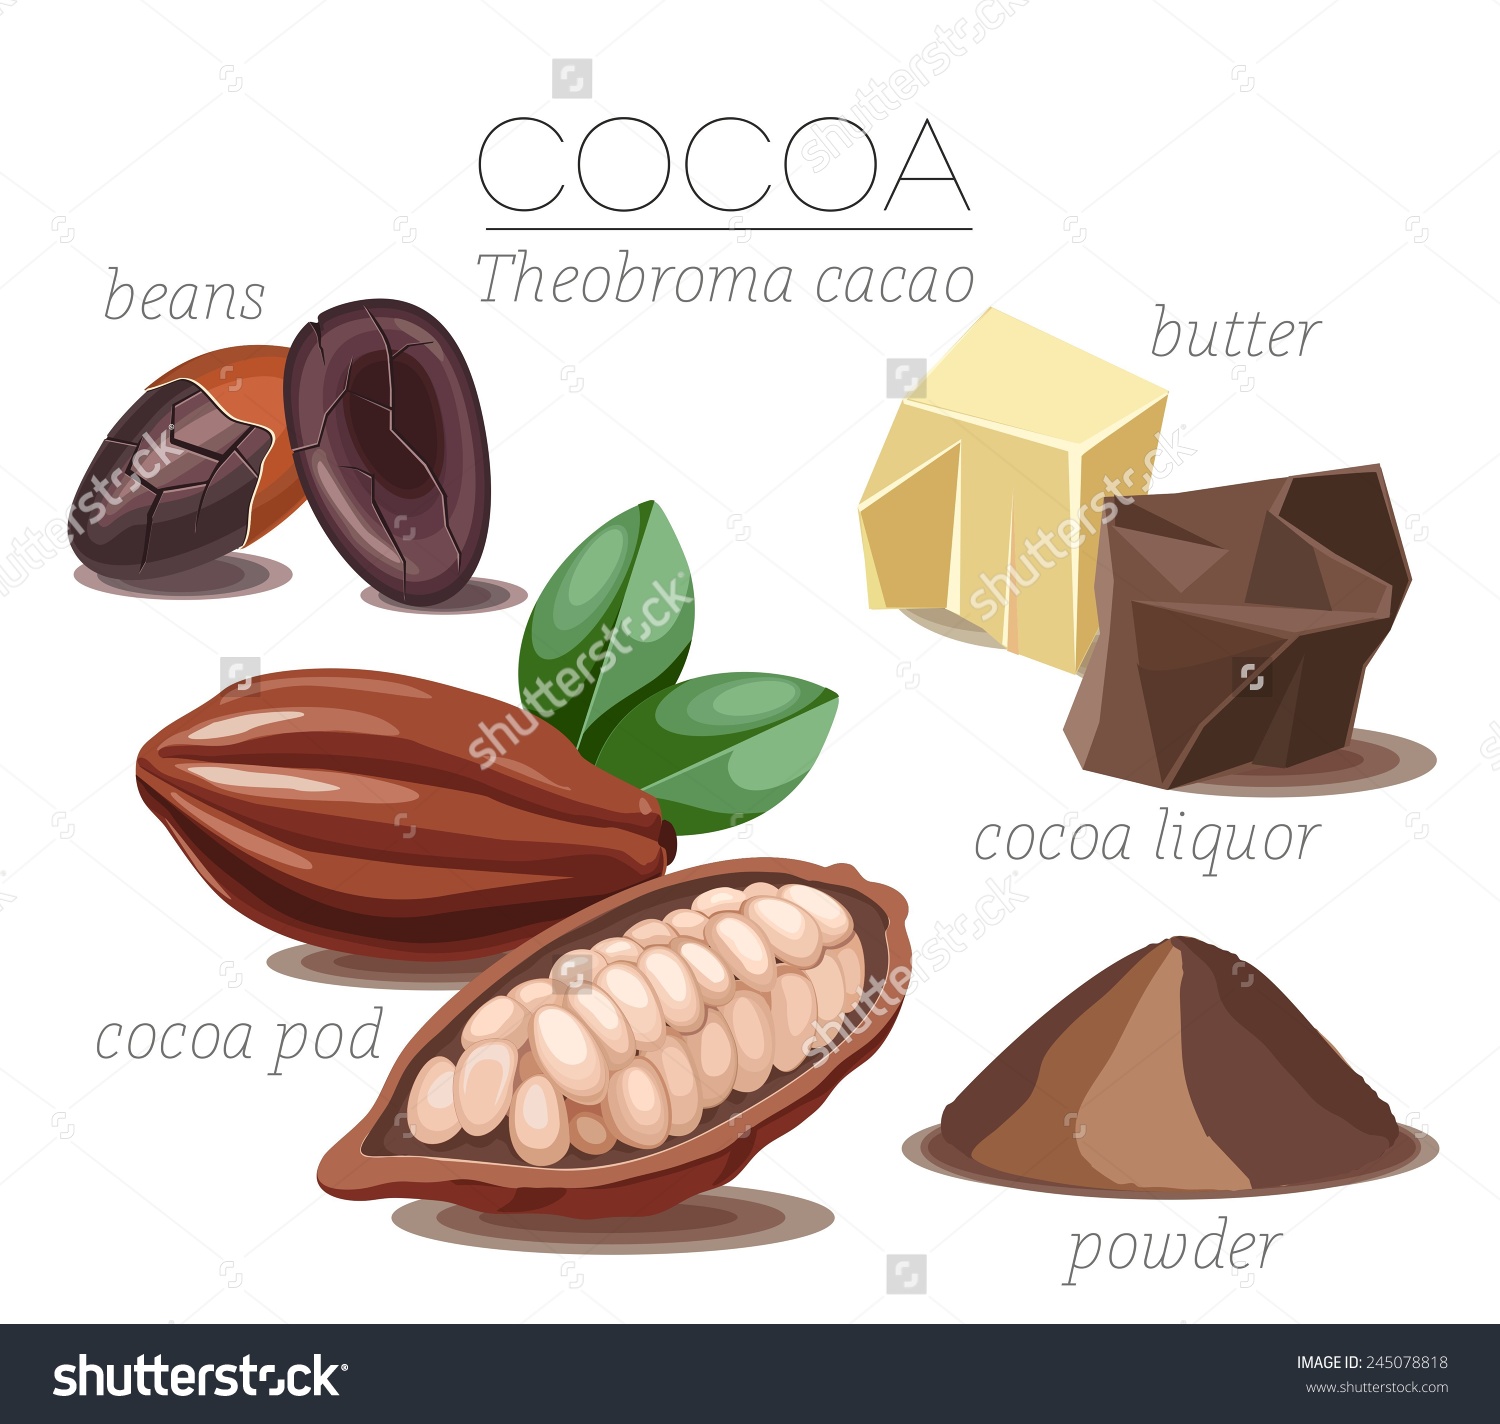 Butter cocoa butter